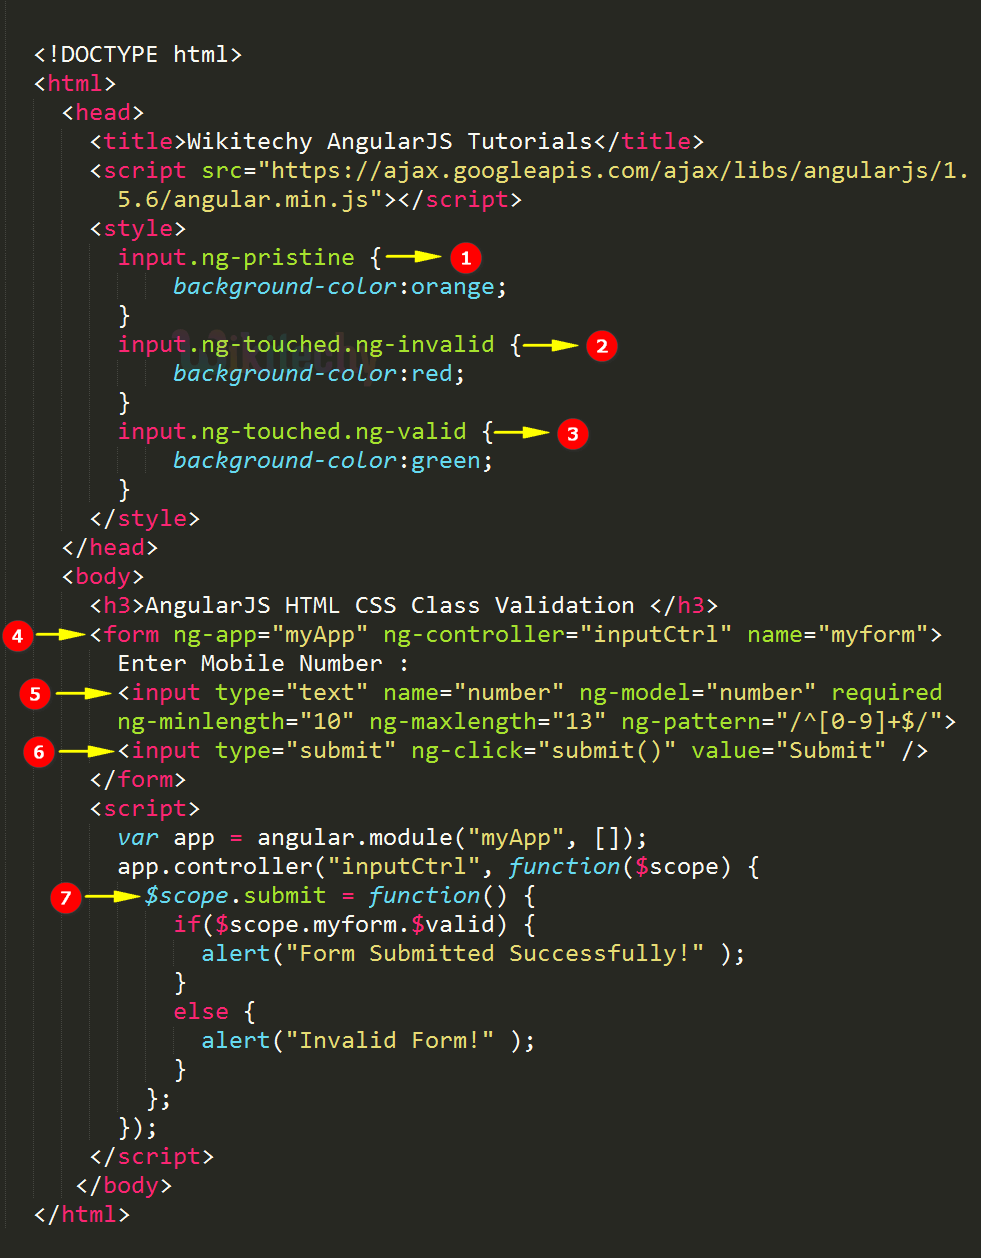 Code Explanation for AngularJS Validation CSS